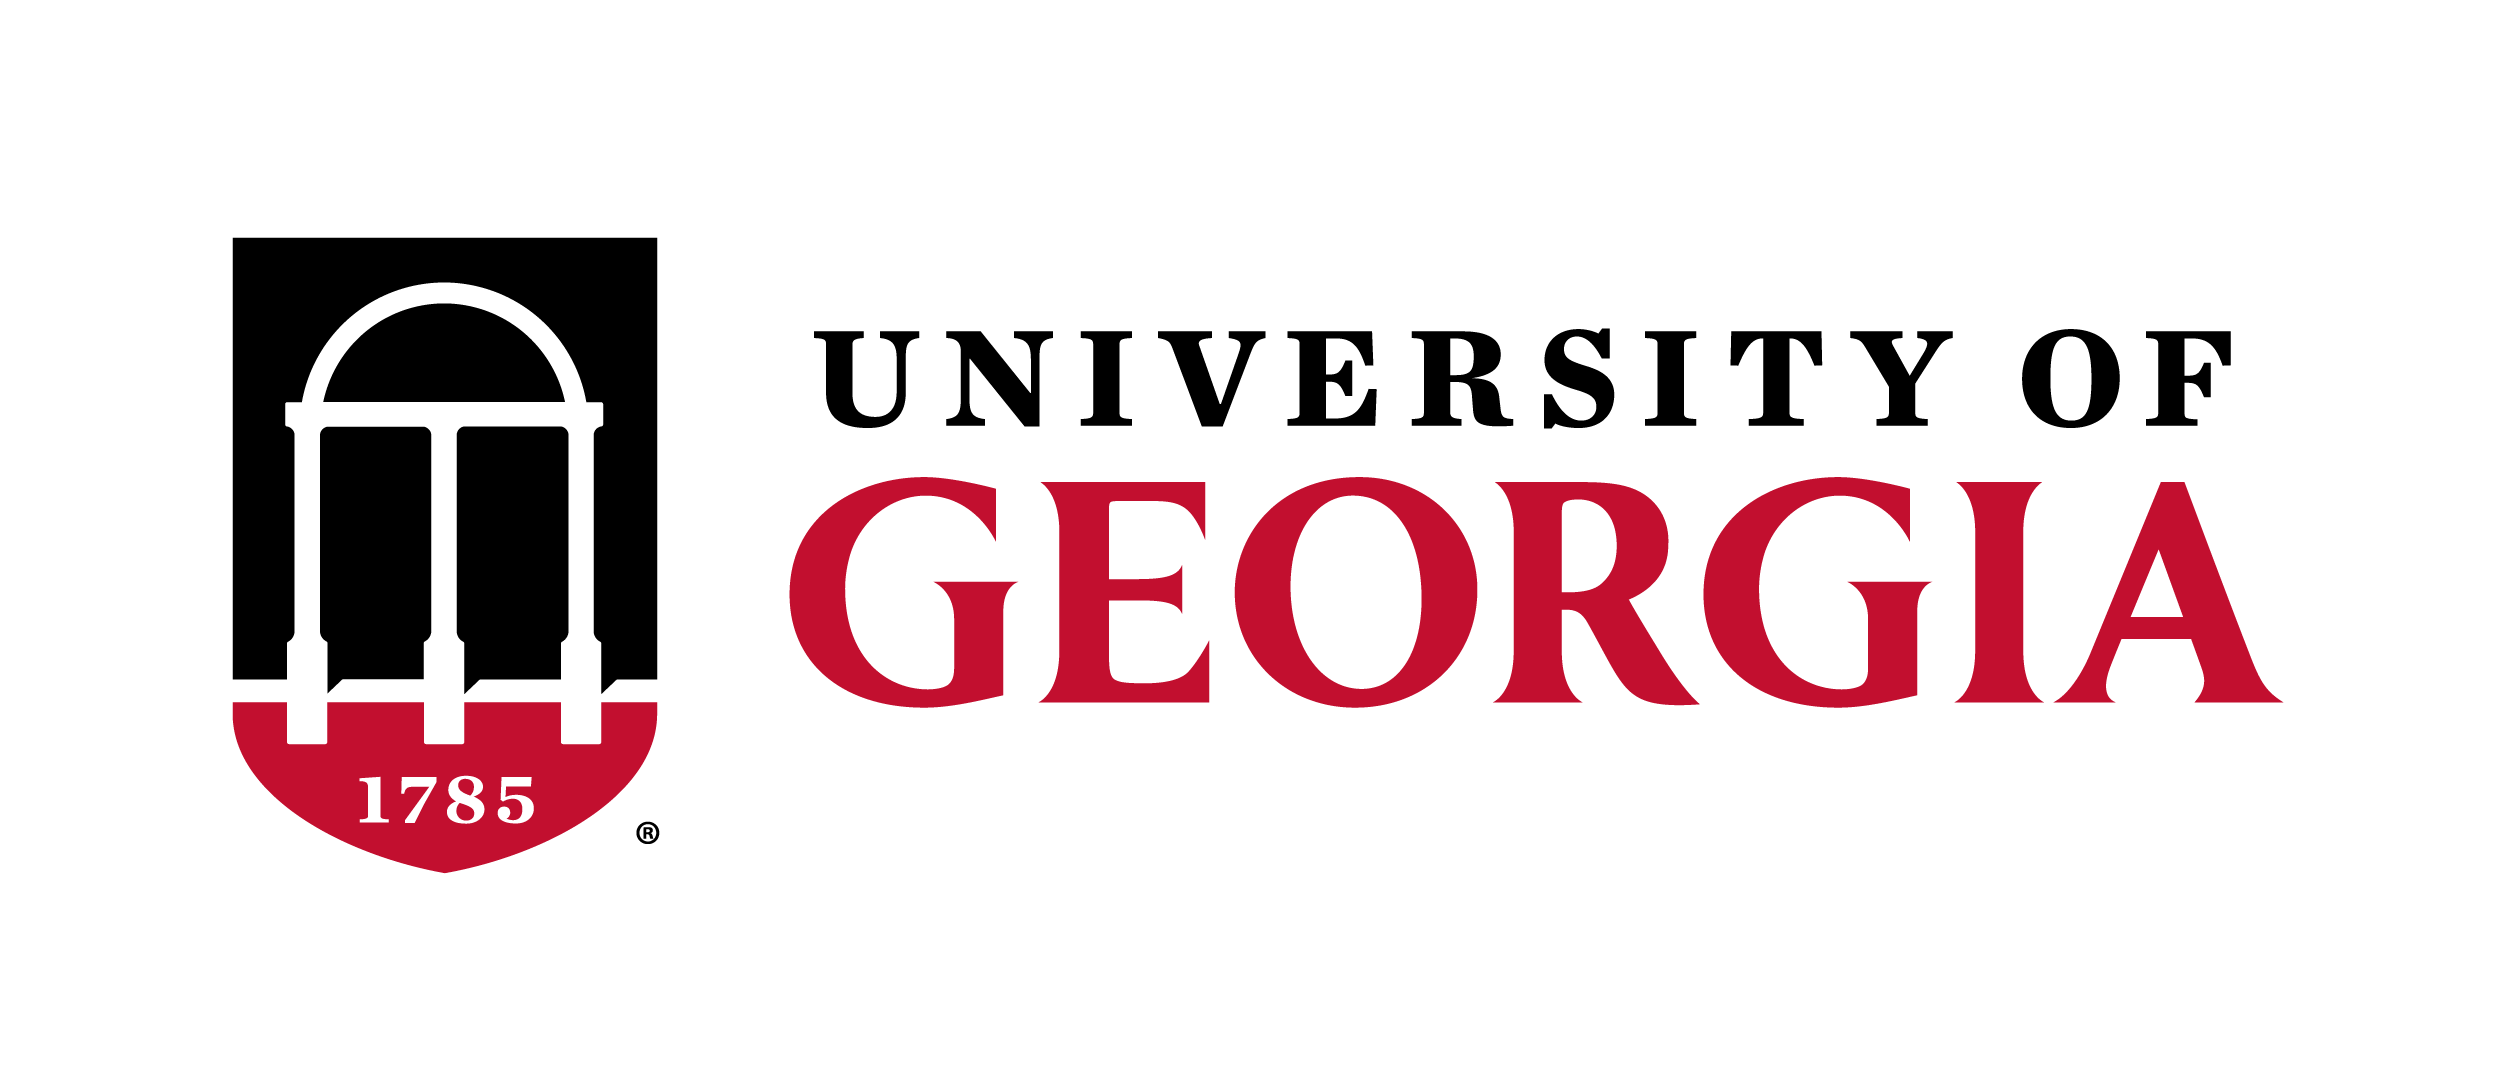 Logos - University of Georgia Brand Style Guide